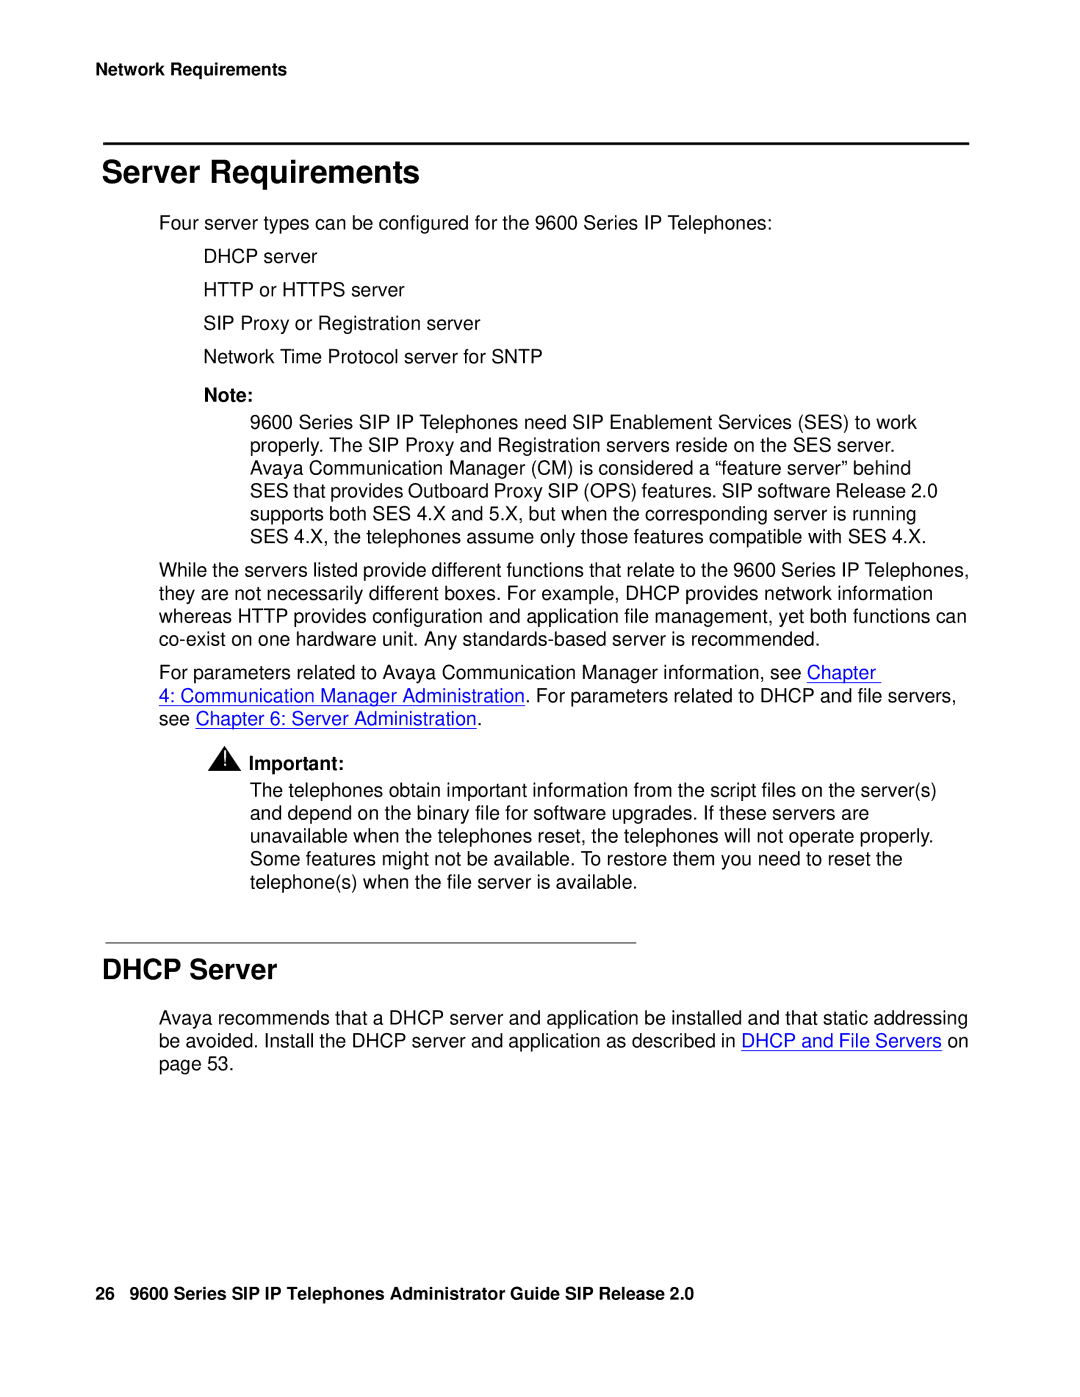 Avaya 9600 manual Server Requirements, Dhcp Server 